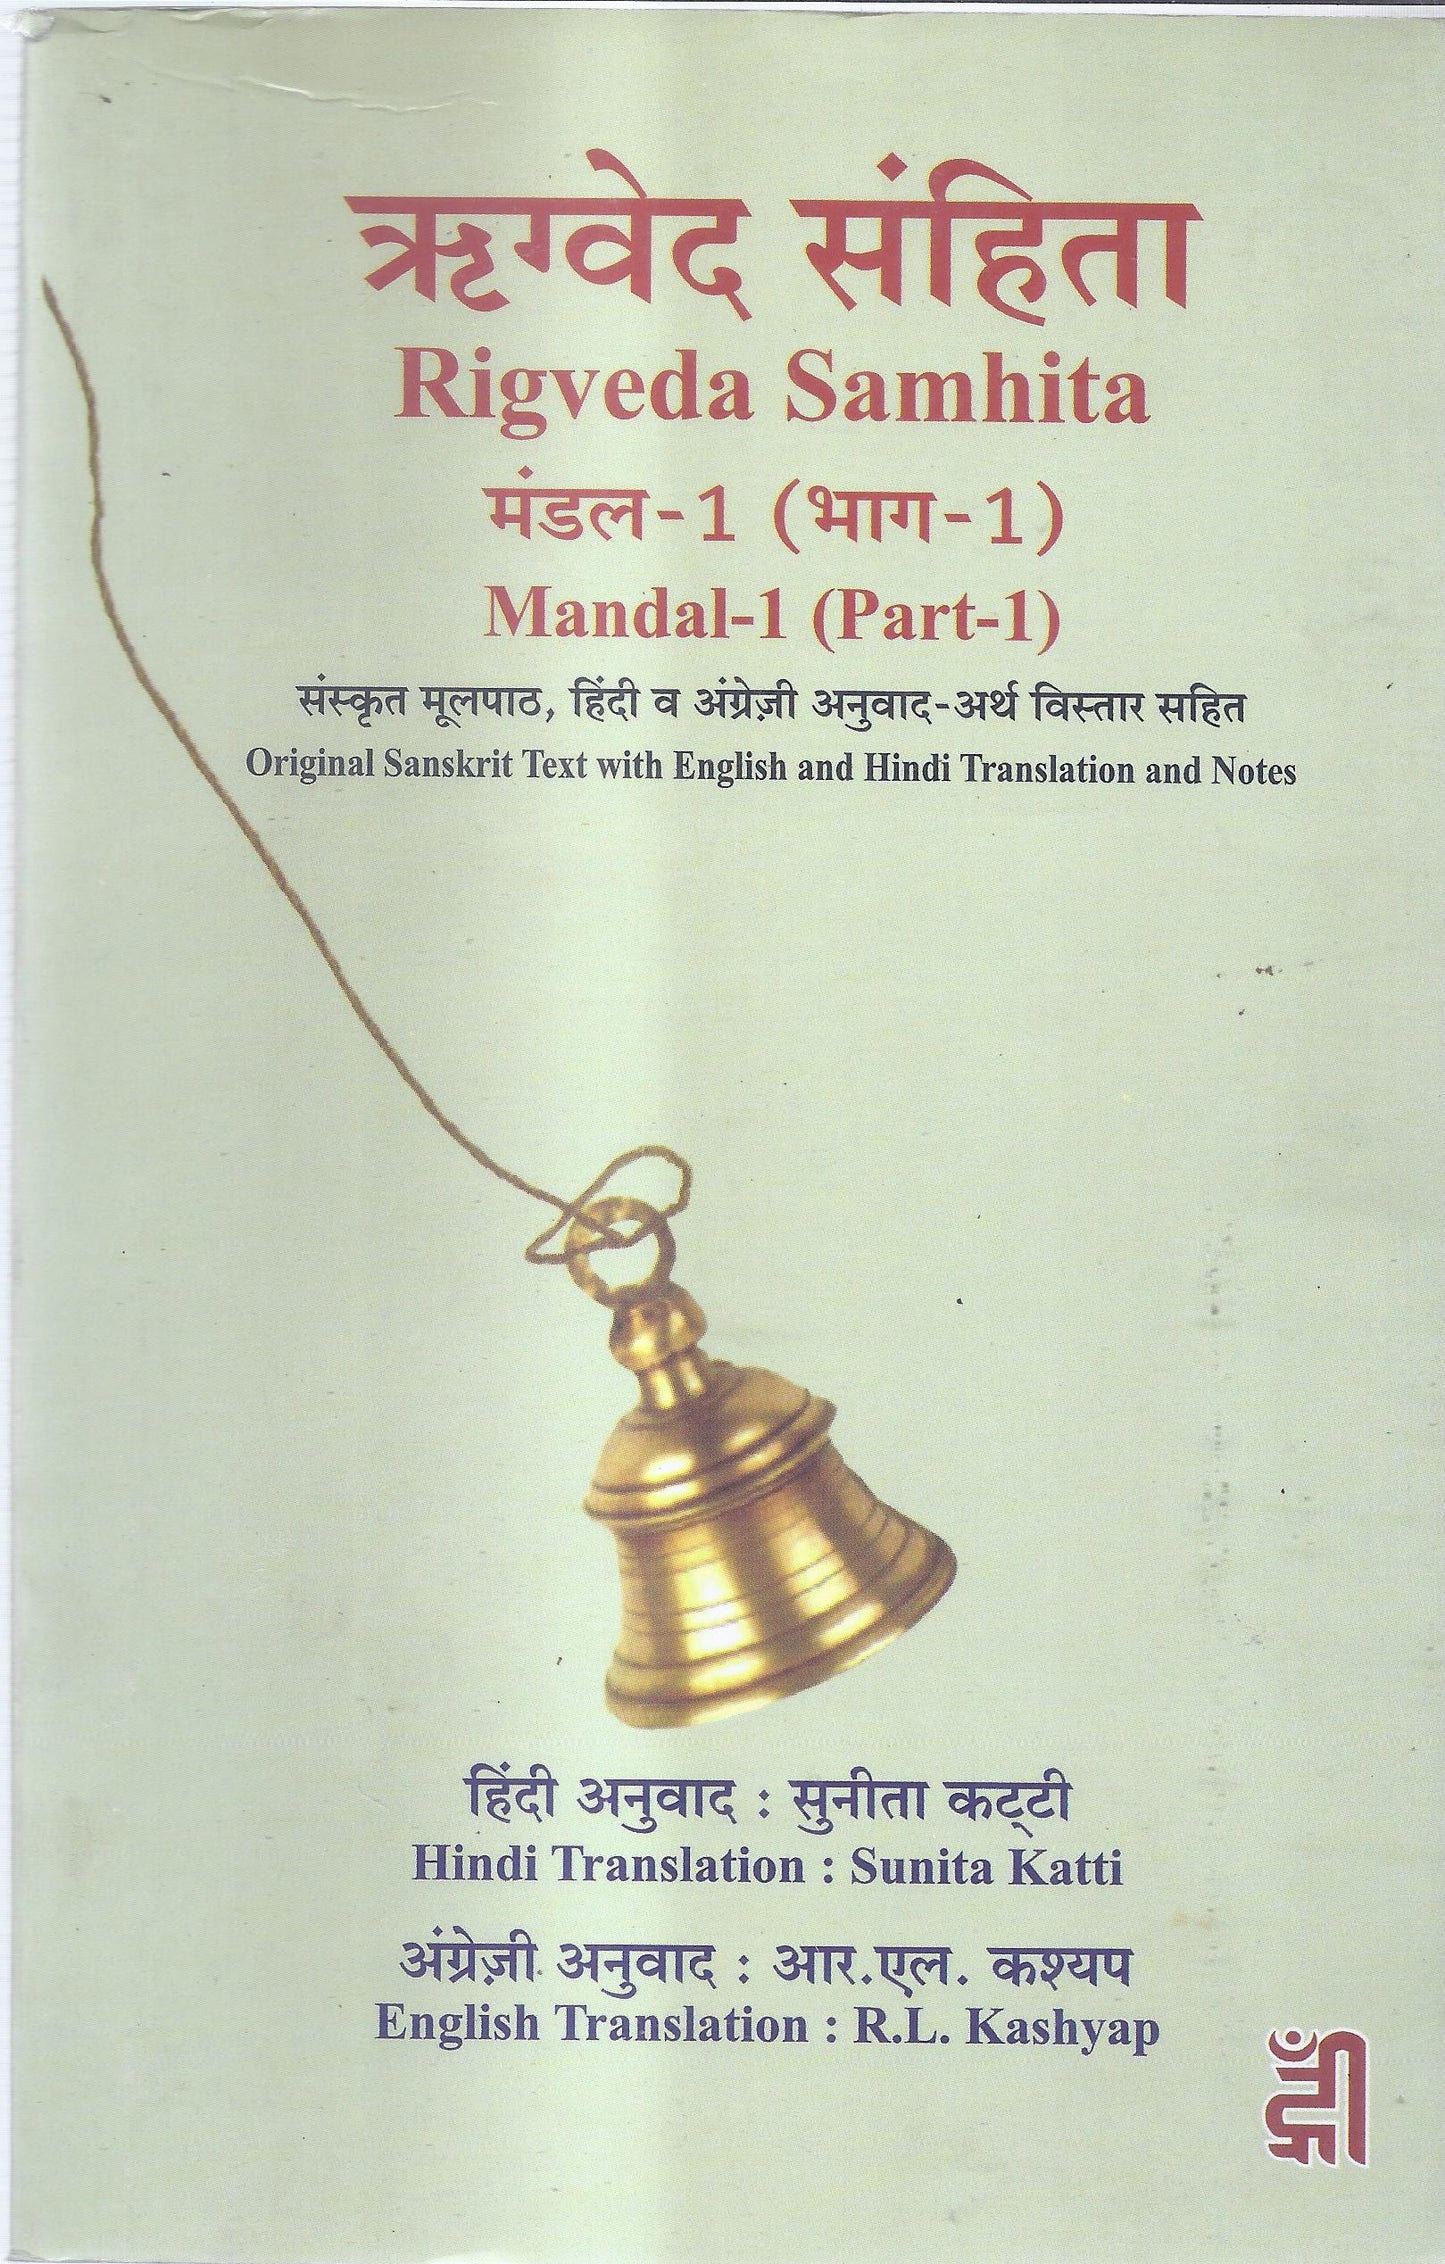 Rig Veda Samhita Mandala 1 Part 1-Hindi